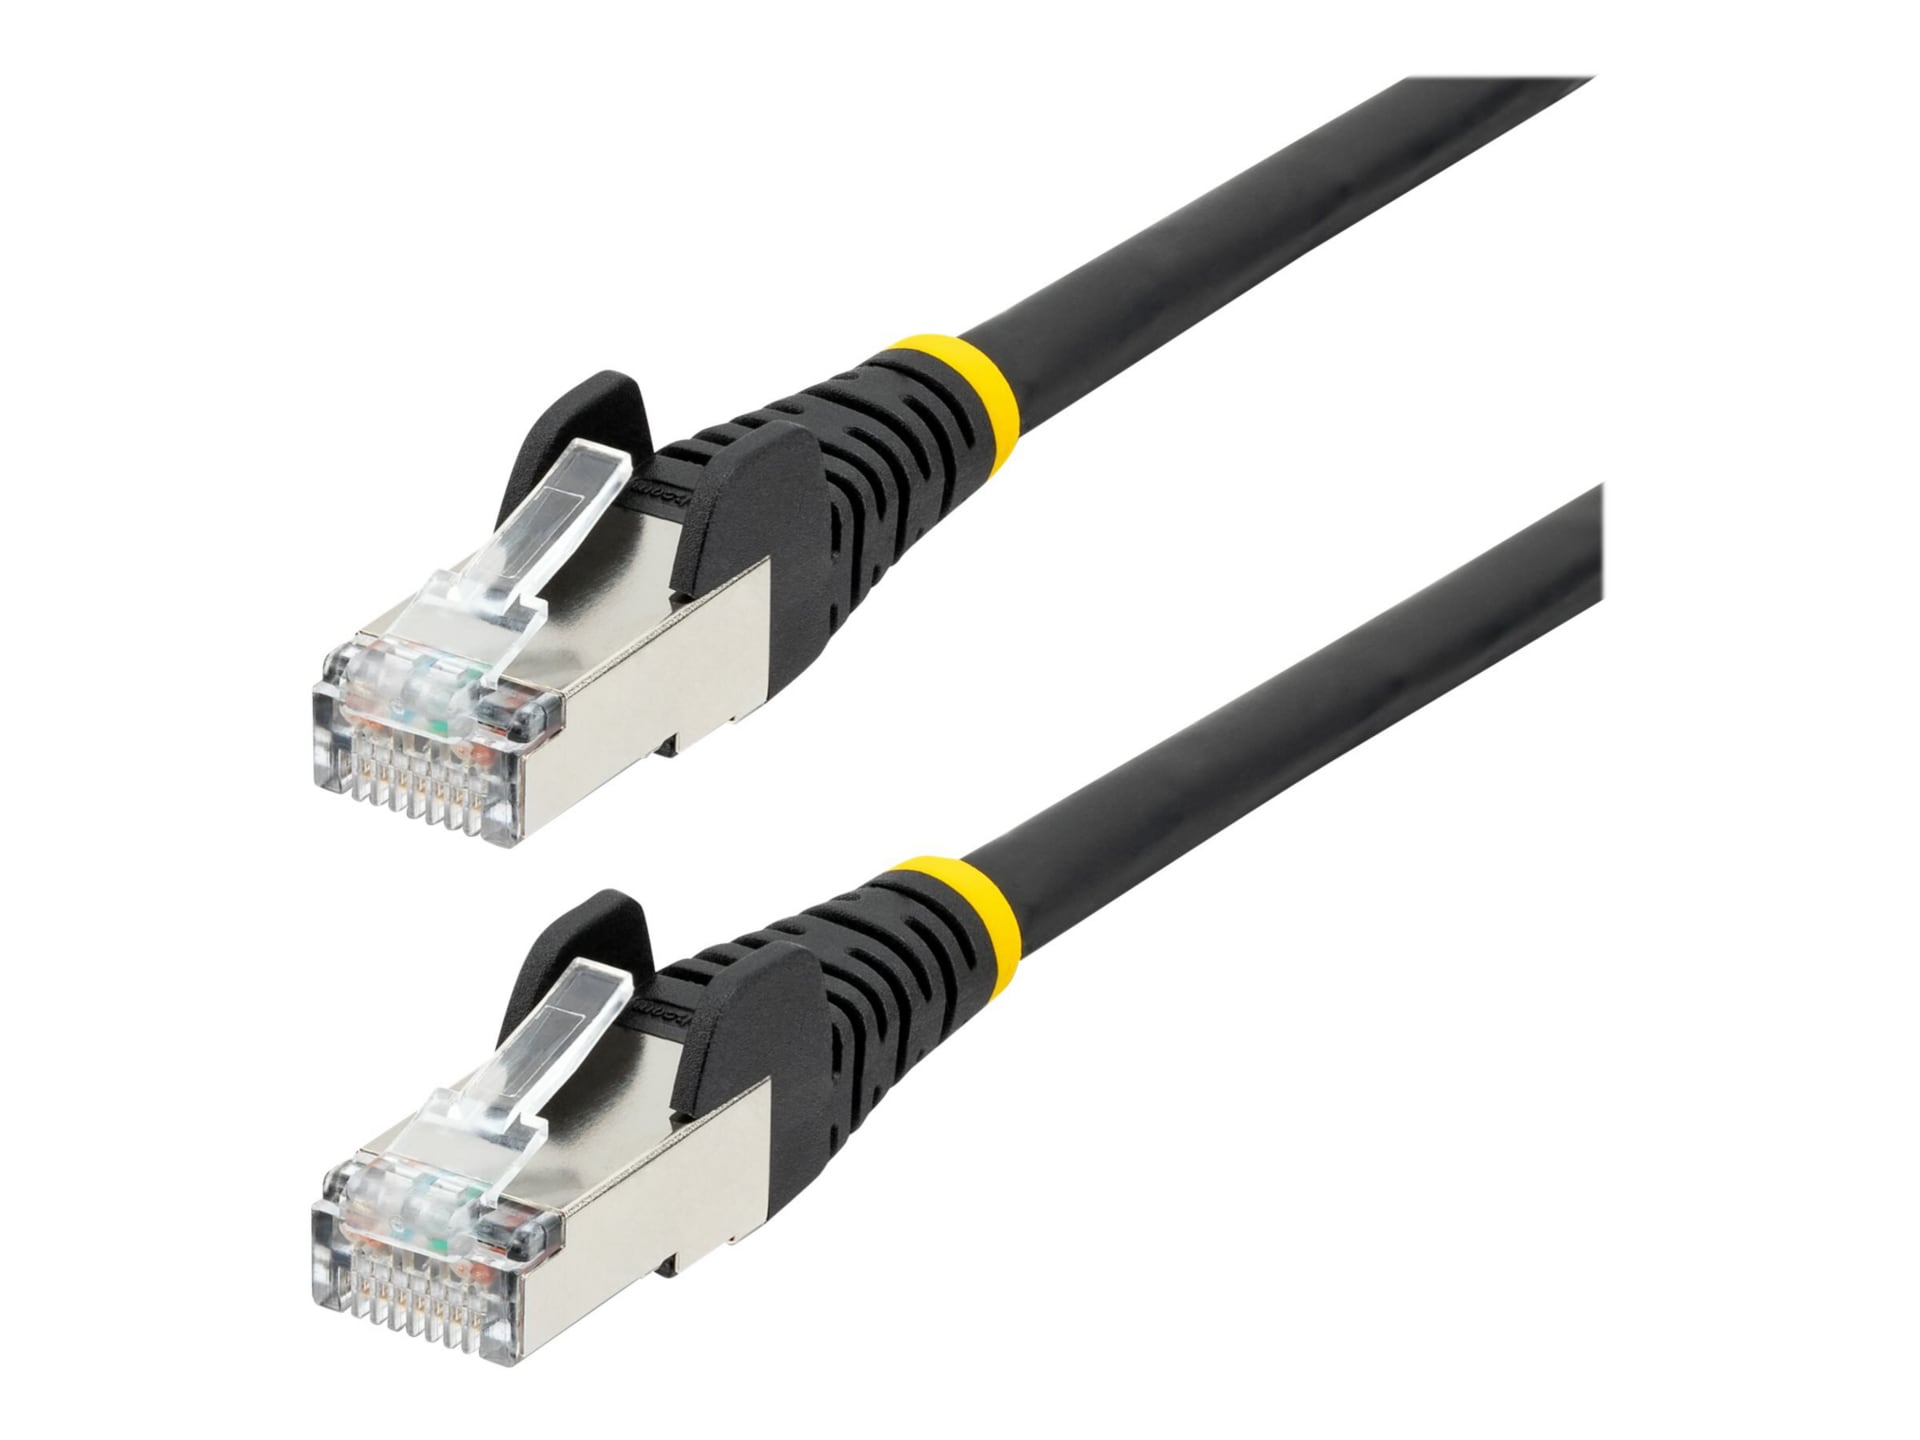 StarTech.com 10ft CAT6a Ethernet Cable, Black Low Smoke Zero Halogen (LSZH) 10 GbE 100W PoE S/FTP Snagless RJ-45 Network